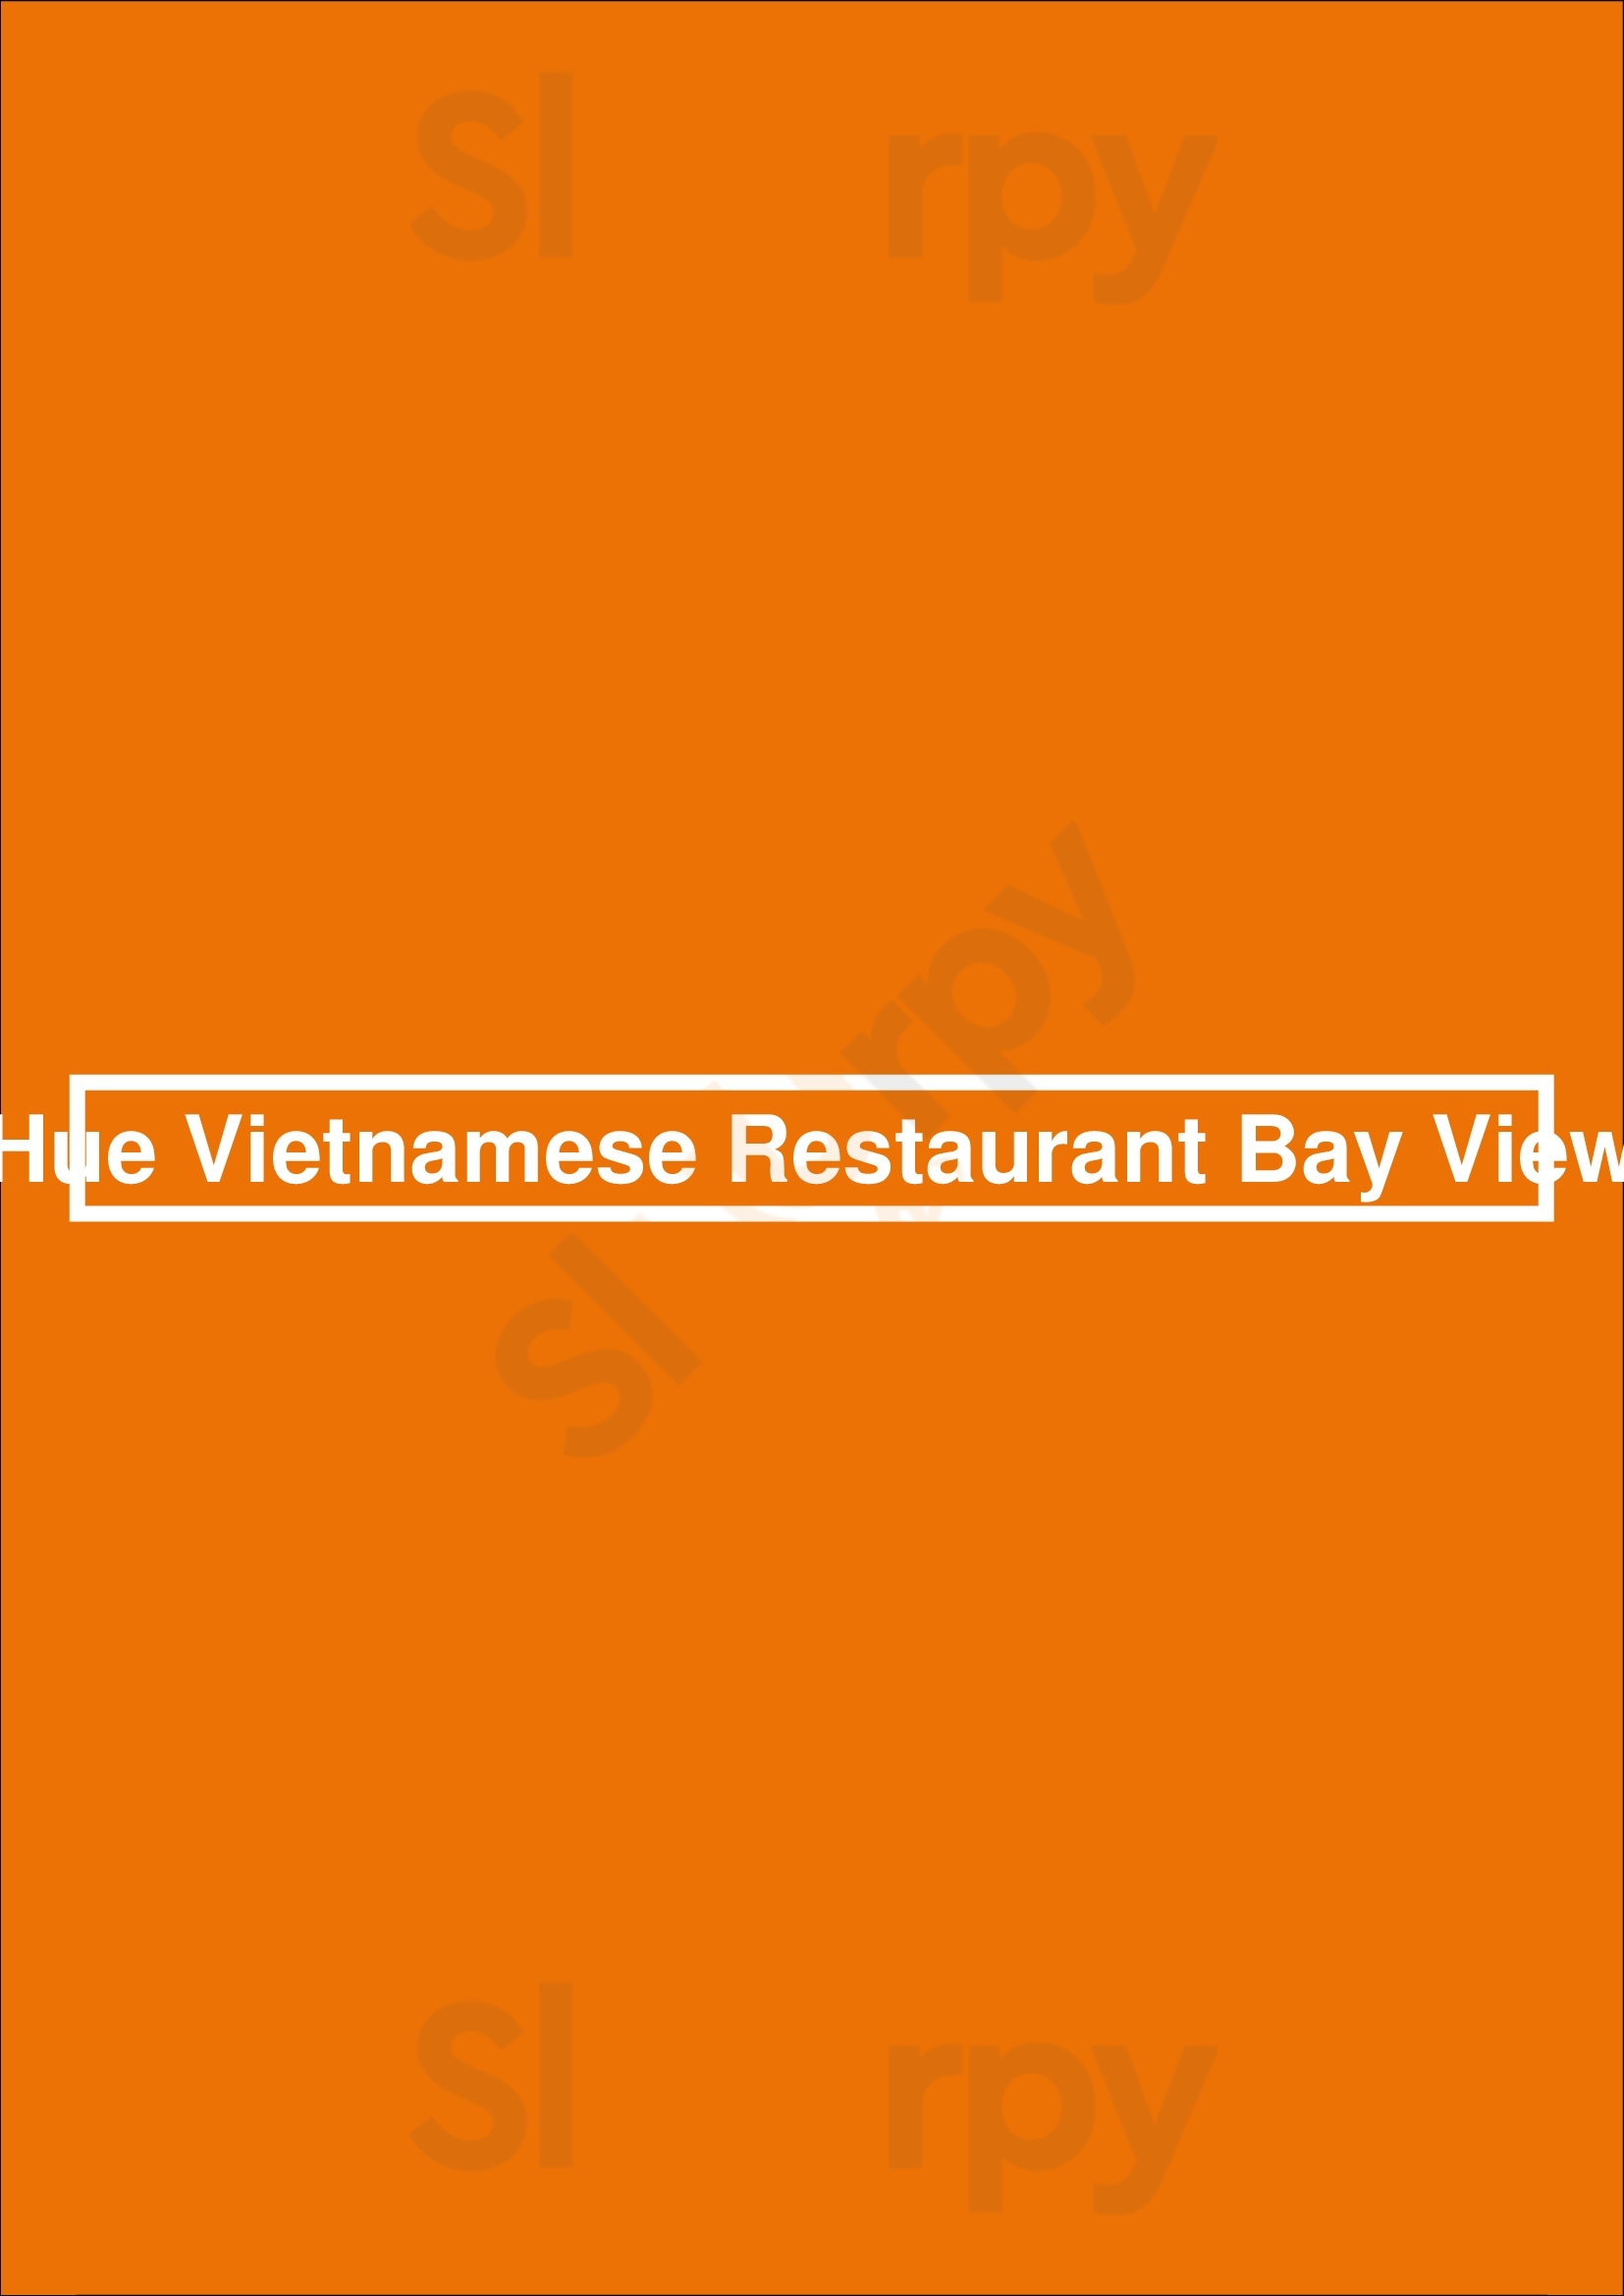 Hue Vietnamese Restaurant Bay View Milwaukee Menu - 1